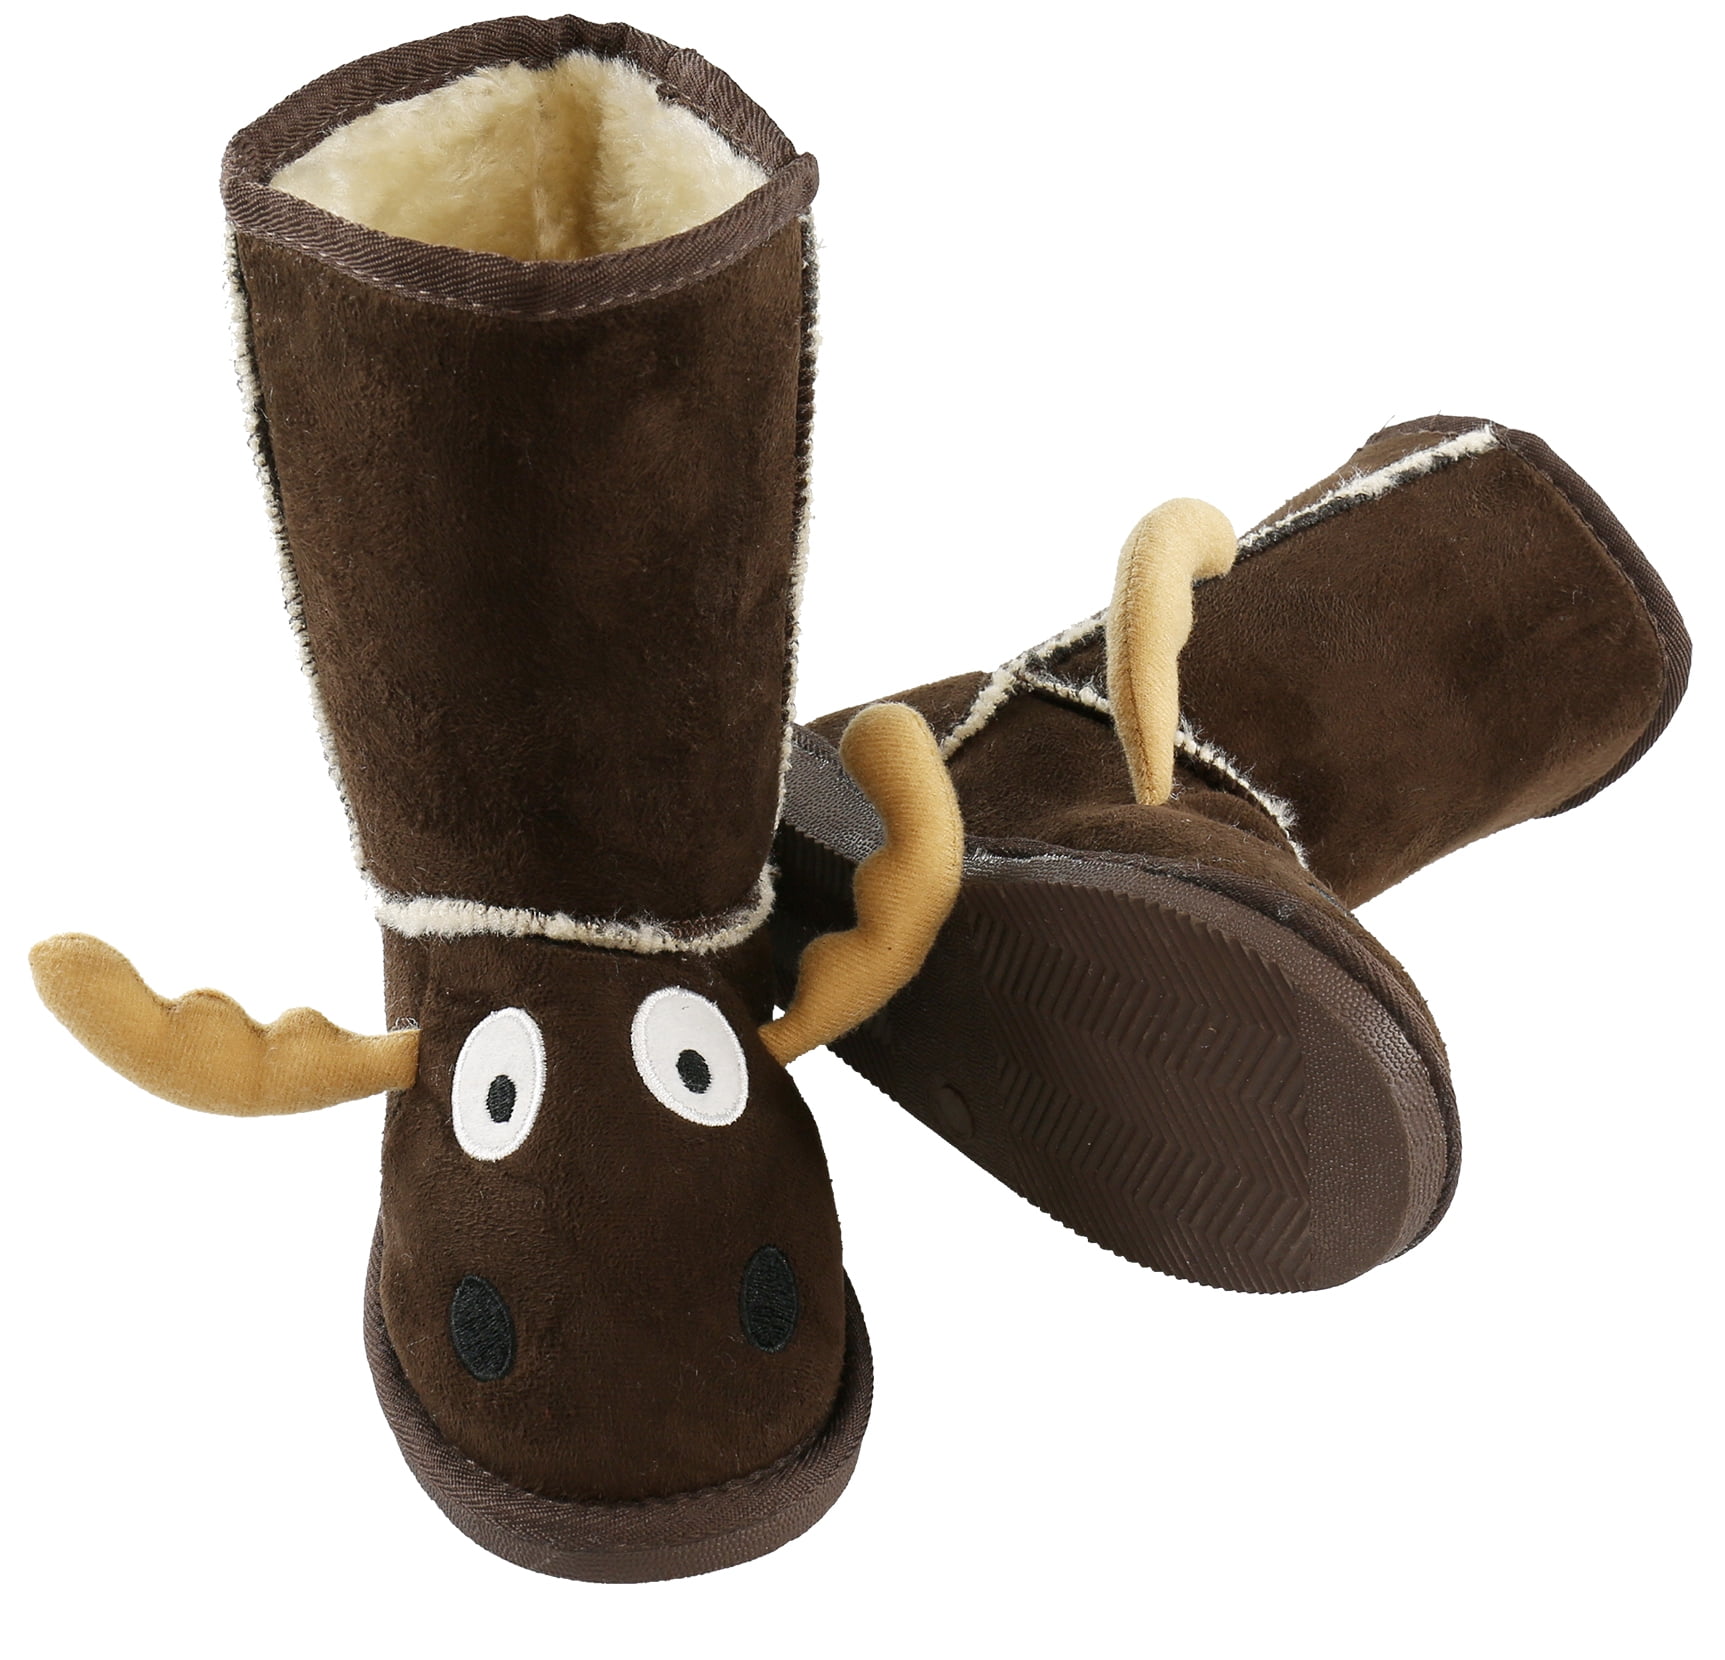 LazyOne Animal Slipper Boots for Kids, Unisex Cozy Children's